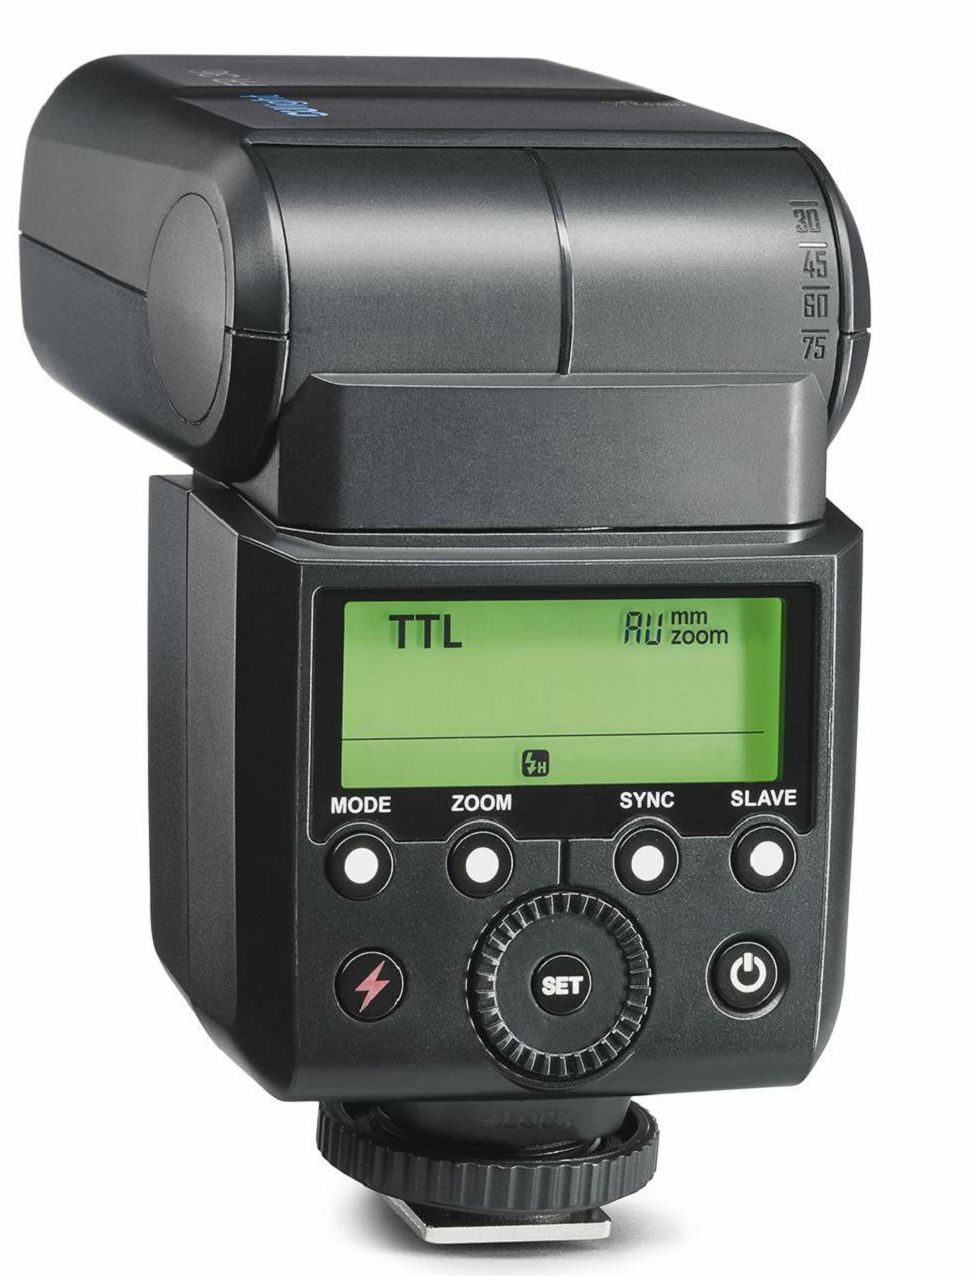 Cullmann CUlight FR 36N i-TTL HSS Flash unit bljeskalica za Nikon (61120)